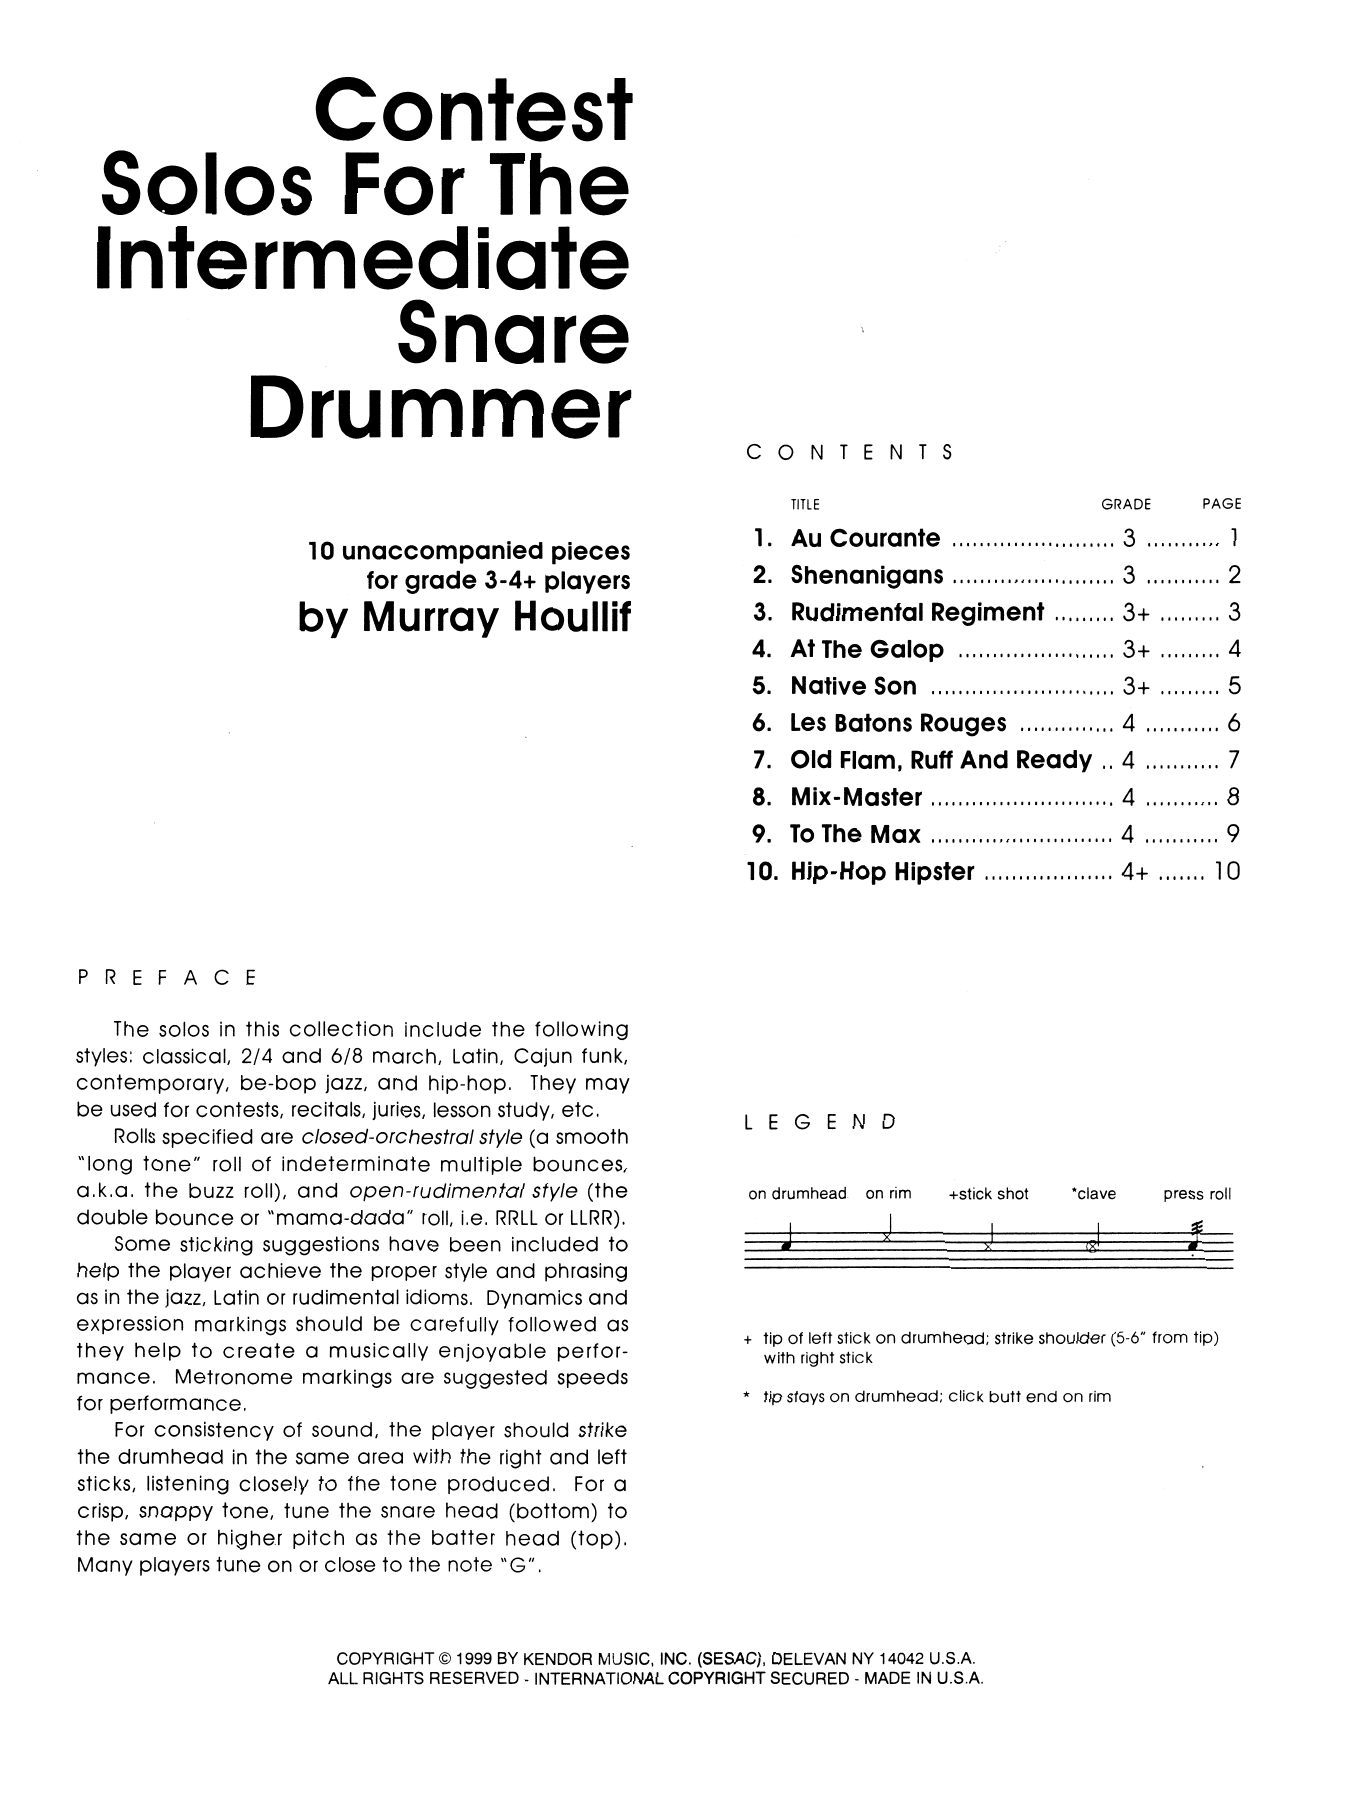 Contest Solos For The Intermediate Snare Drummer (Percussion Solo) von Murray Houllif